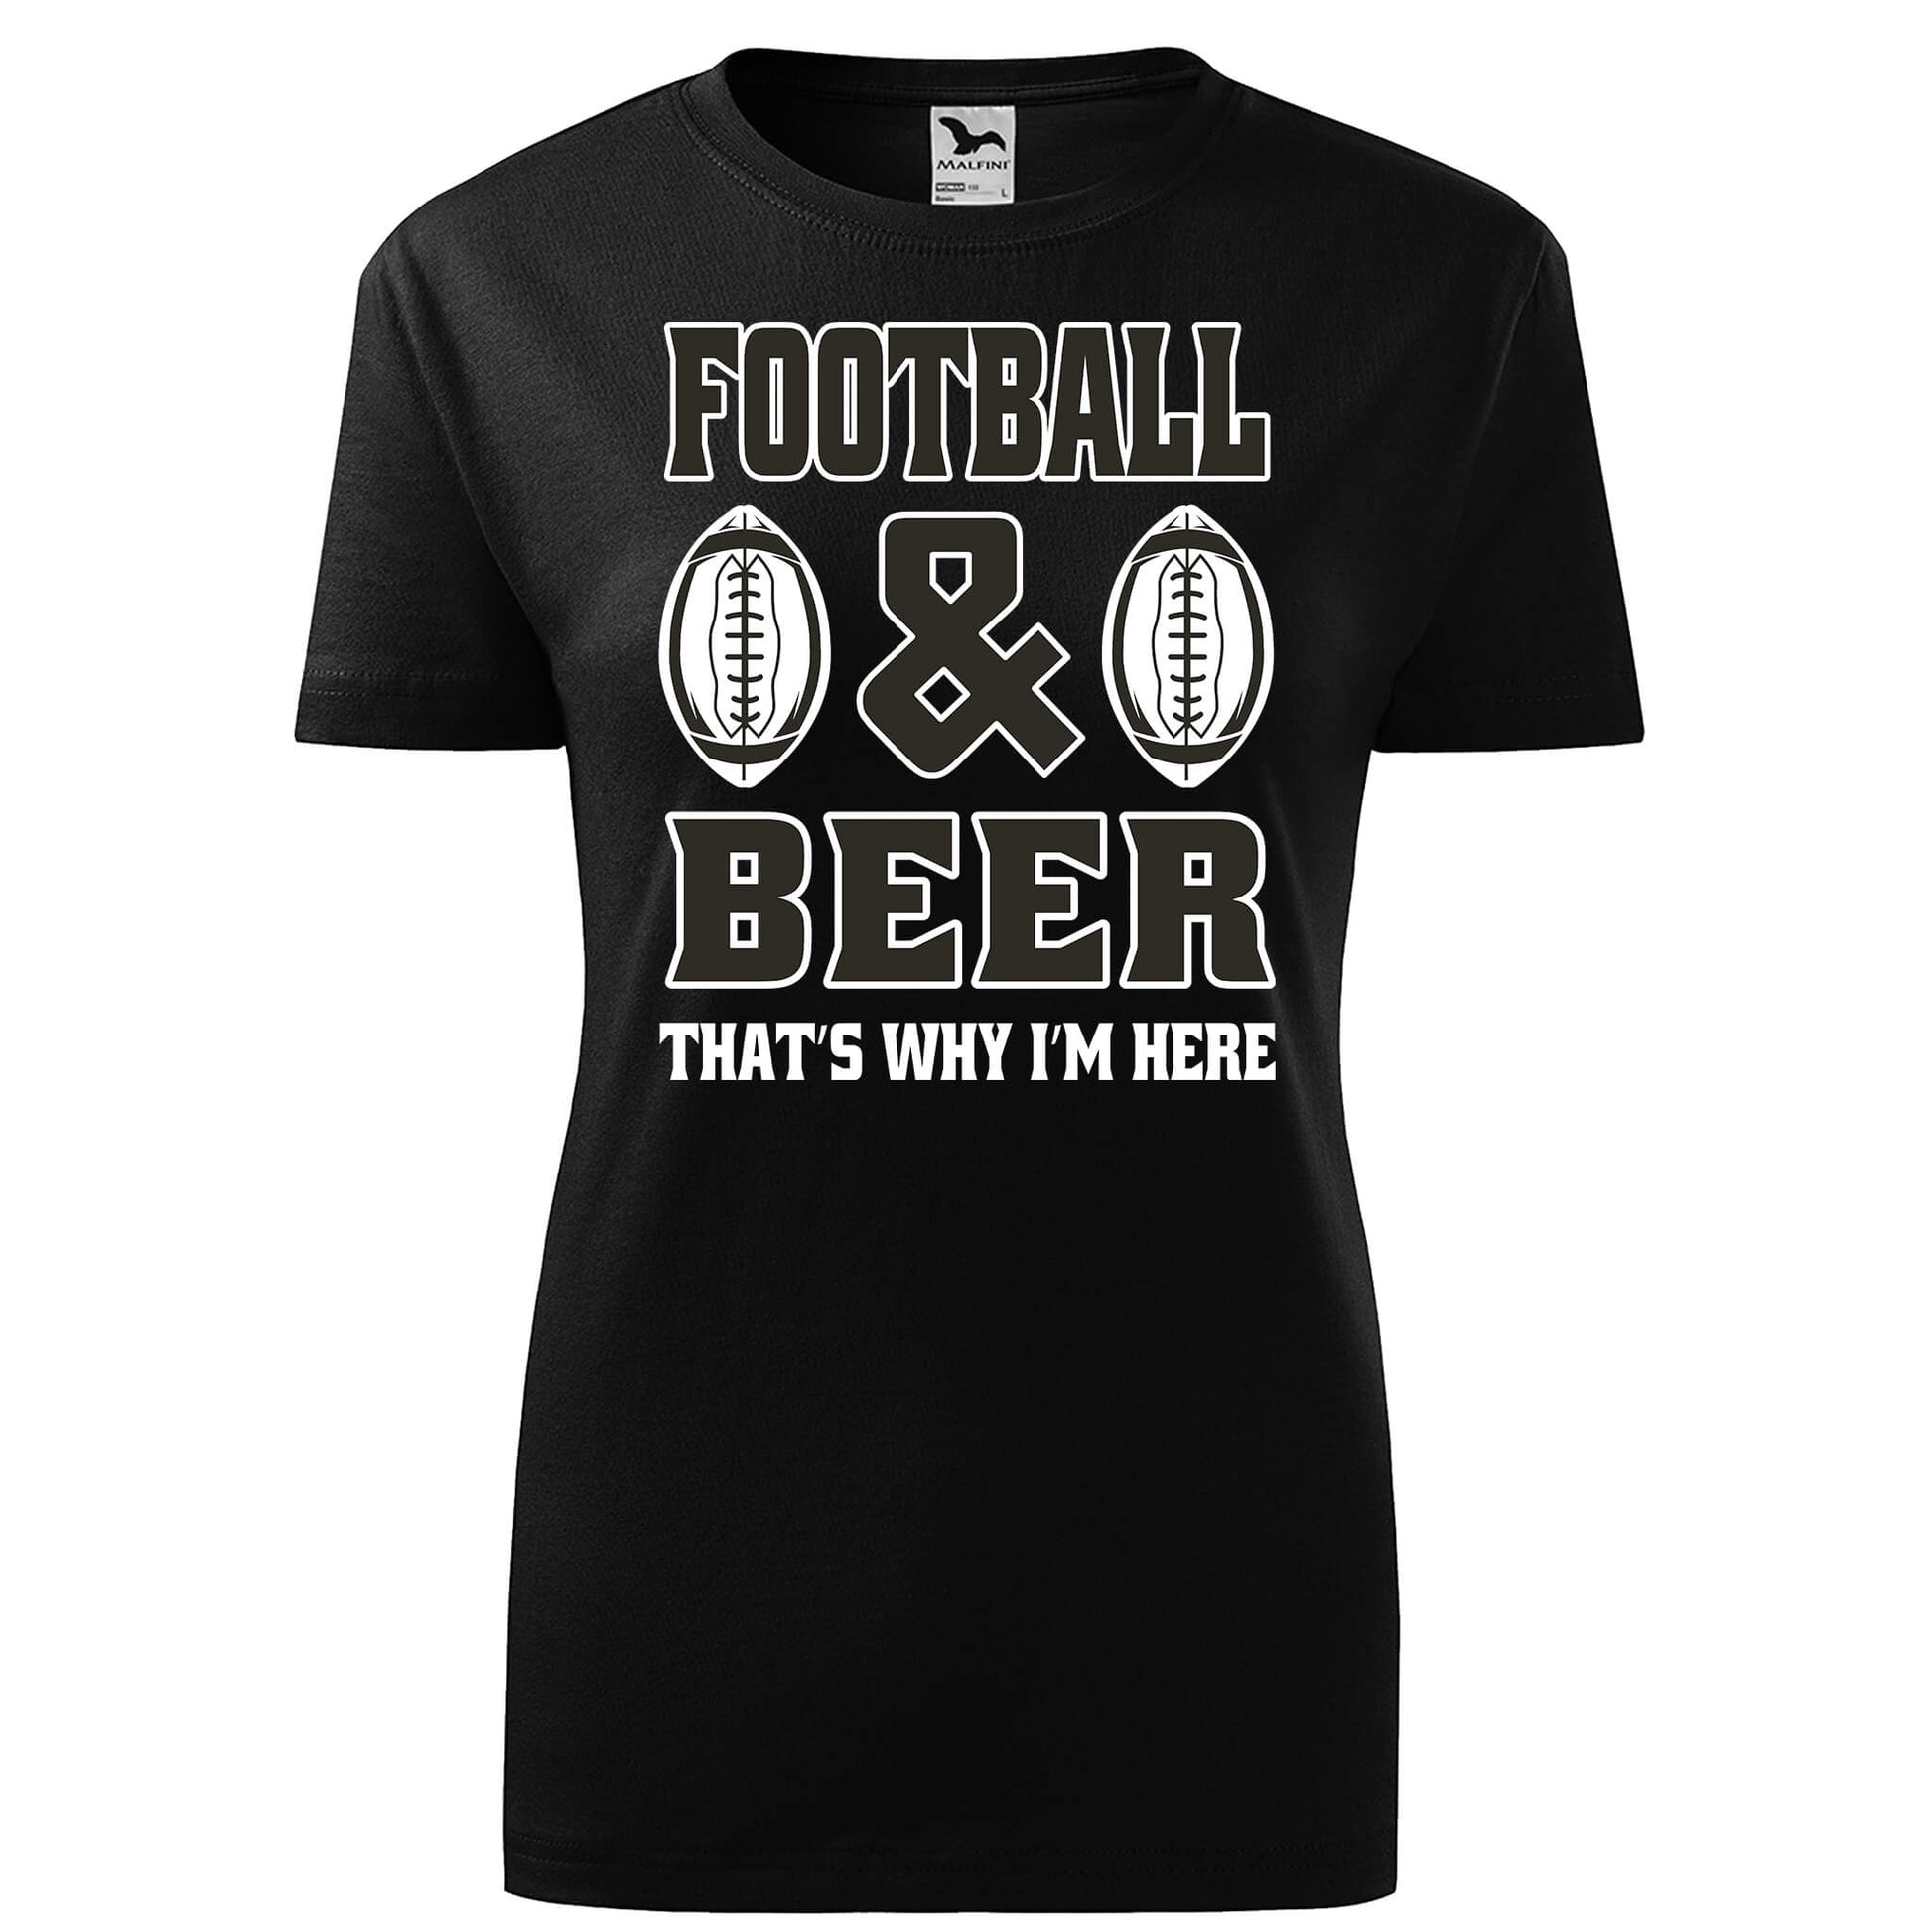 Football and beer t-shirt - rvdesignprint